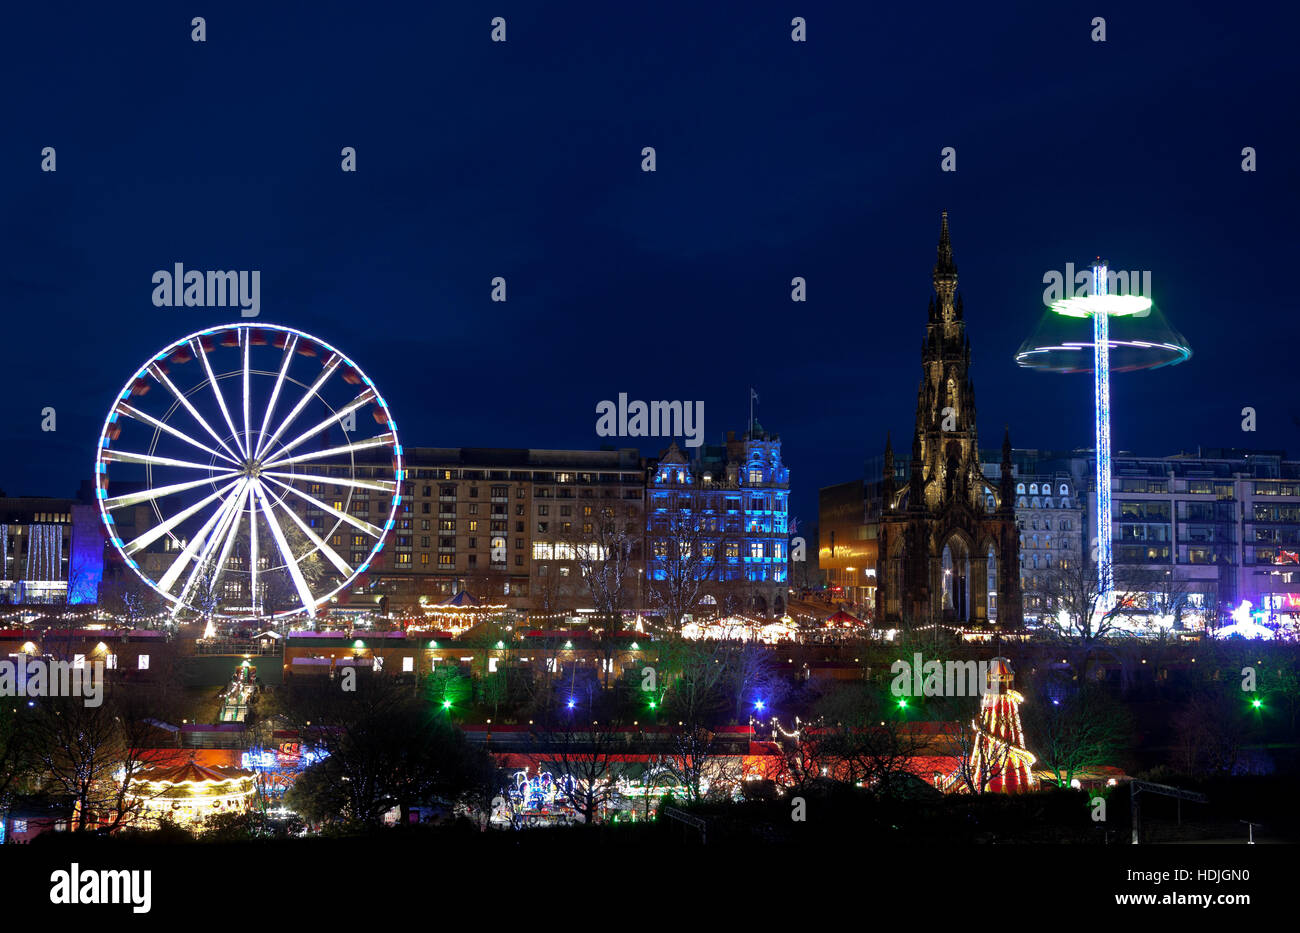 Edinburgh Christmas illuminations lights and fun fair, East Princes Street Gardens, Scotland UK 2016 Stock Photo